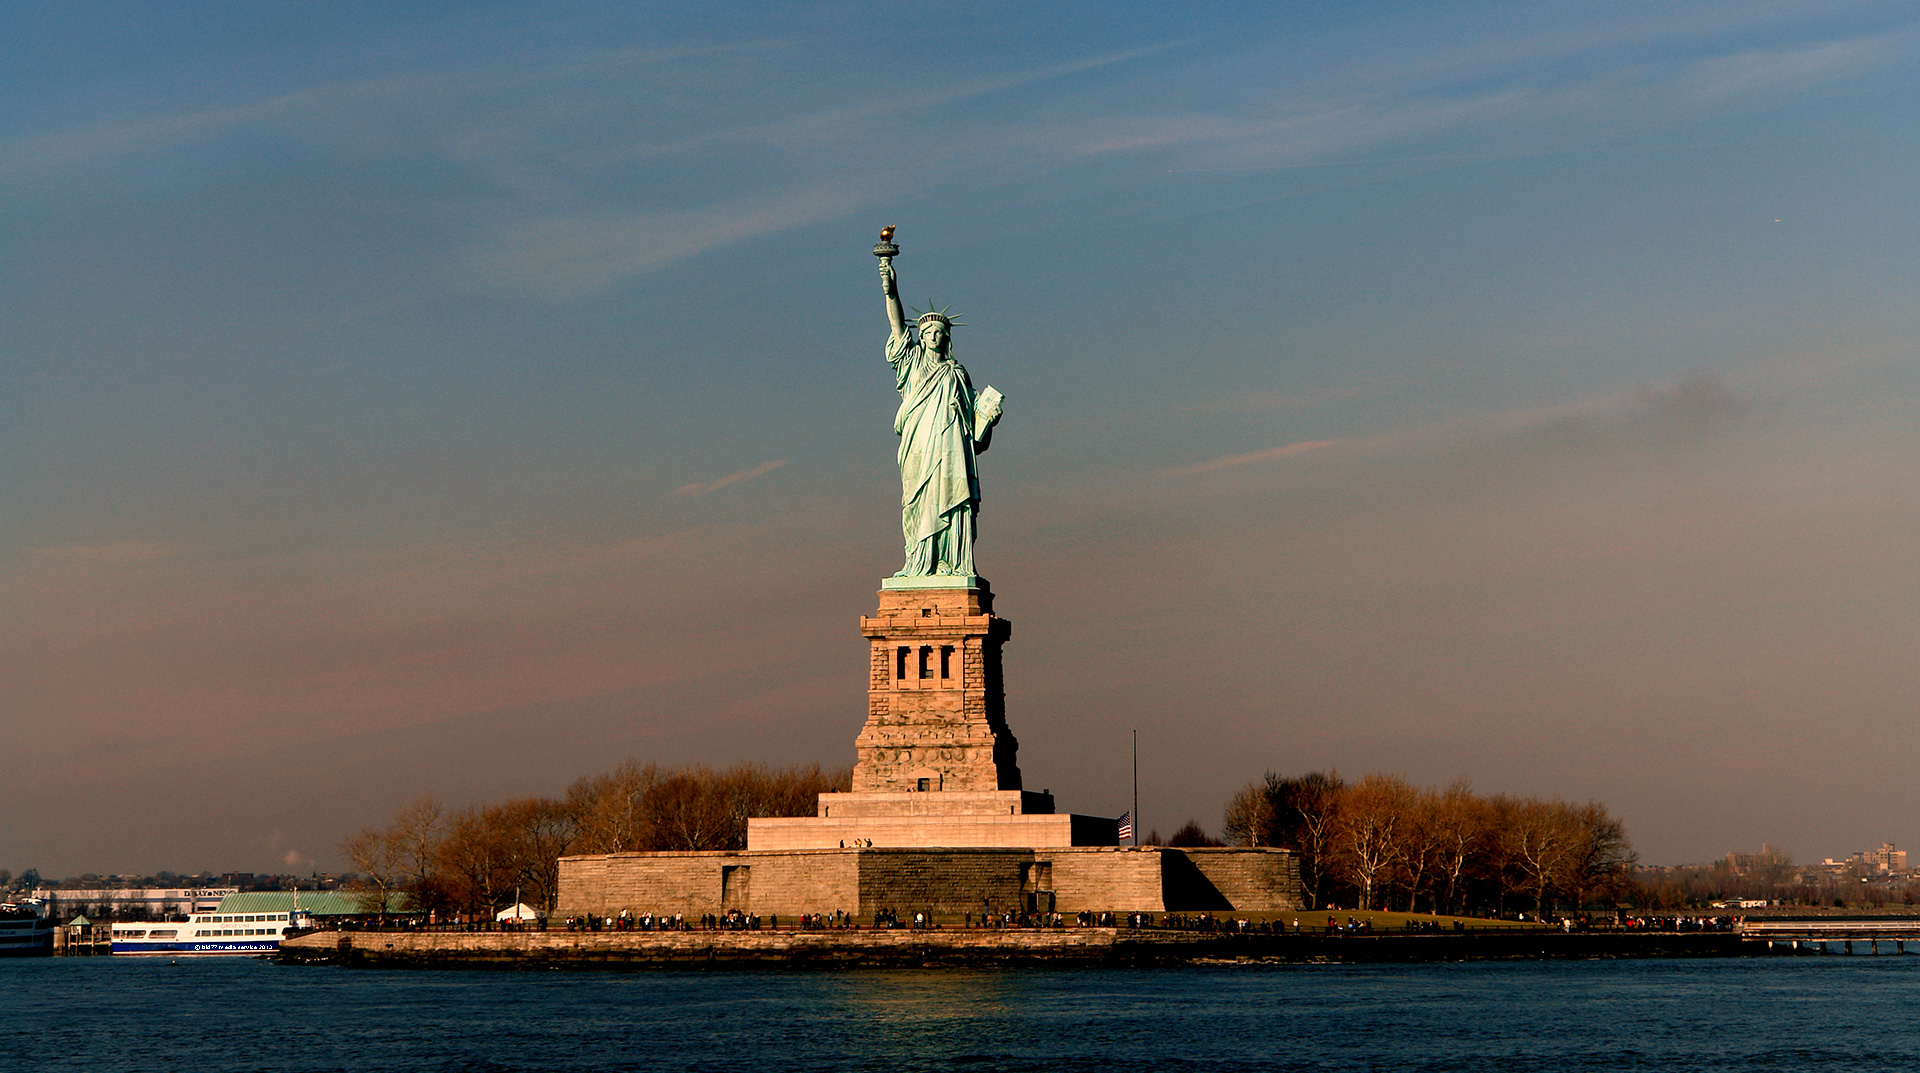 911 Wallpaper Statue Of Liberty Wallpapersafari Afalchi Free images wallpape [afalchi.blogspot.com]